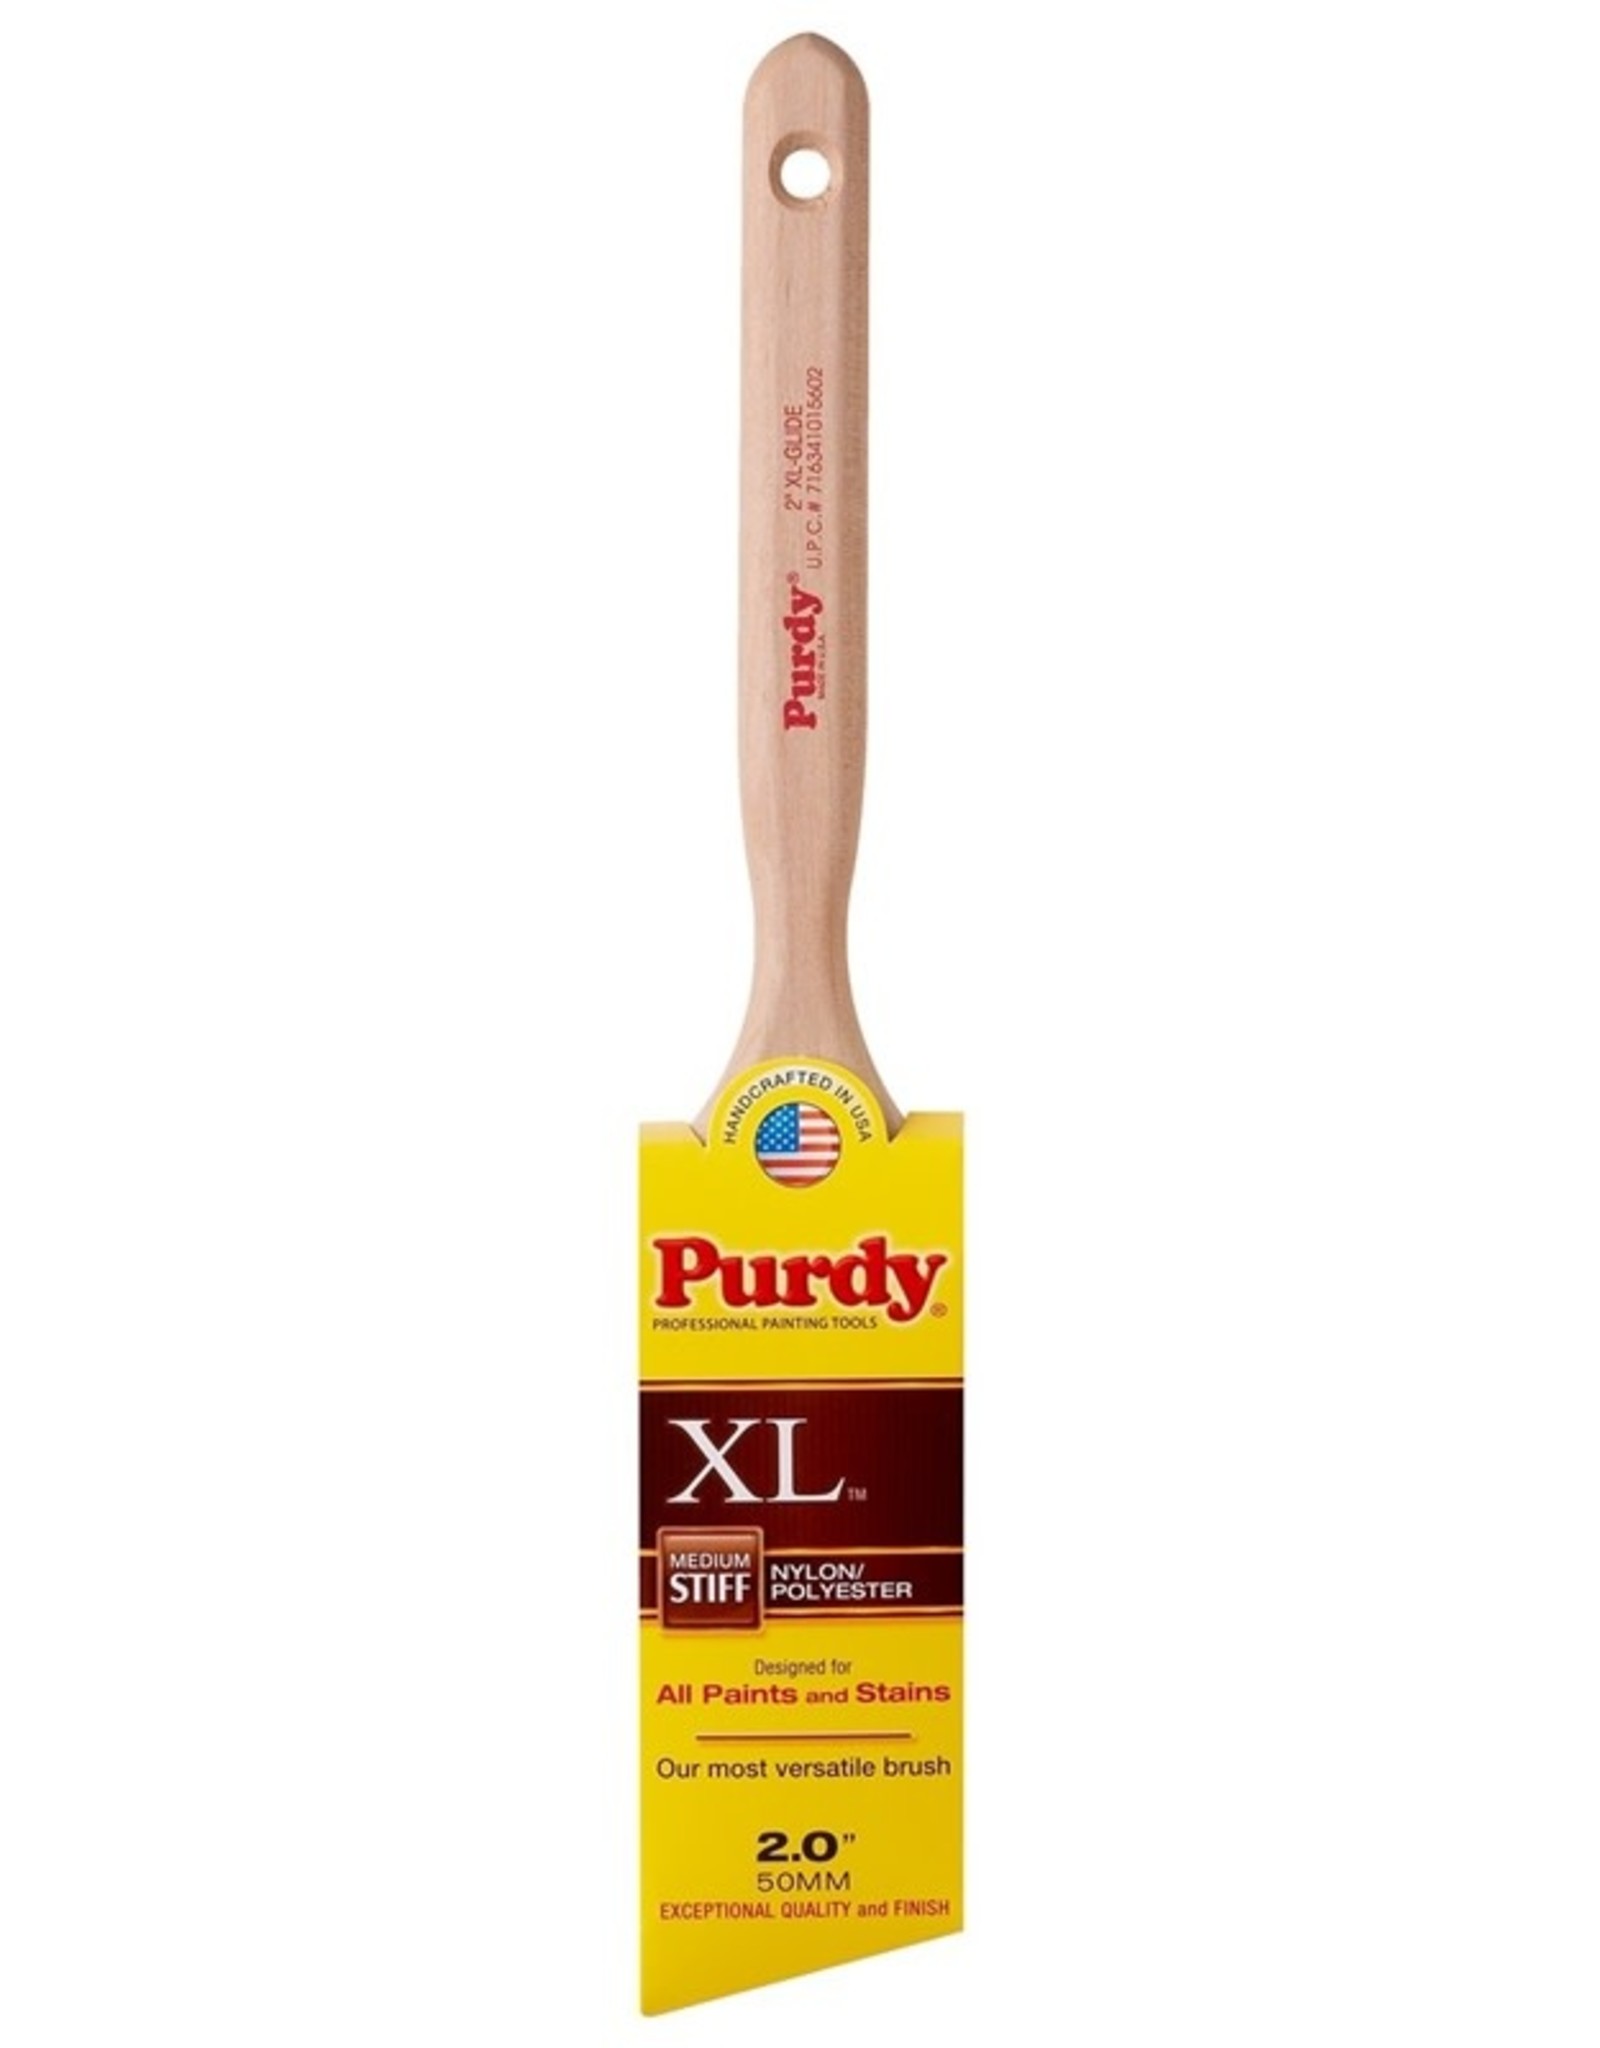 Purdy Purdy XL Glide 152320 Trim Brush, Nylon/Polyester Bristle, Fluted Handle